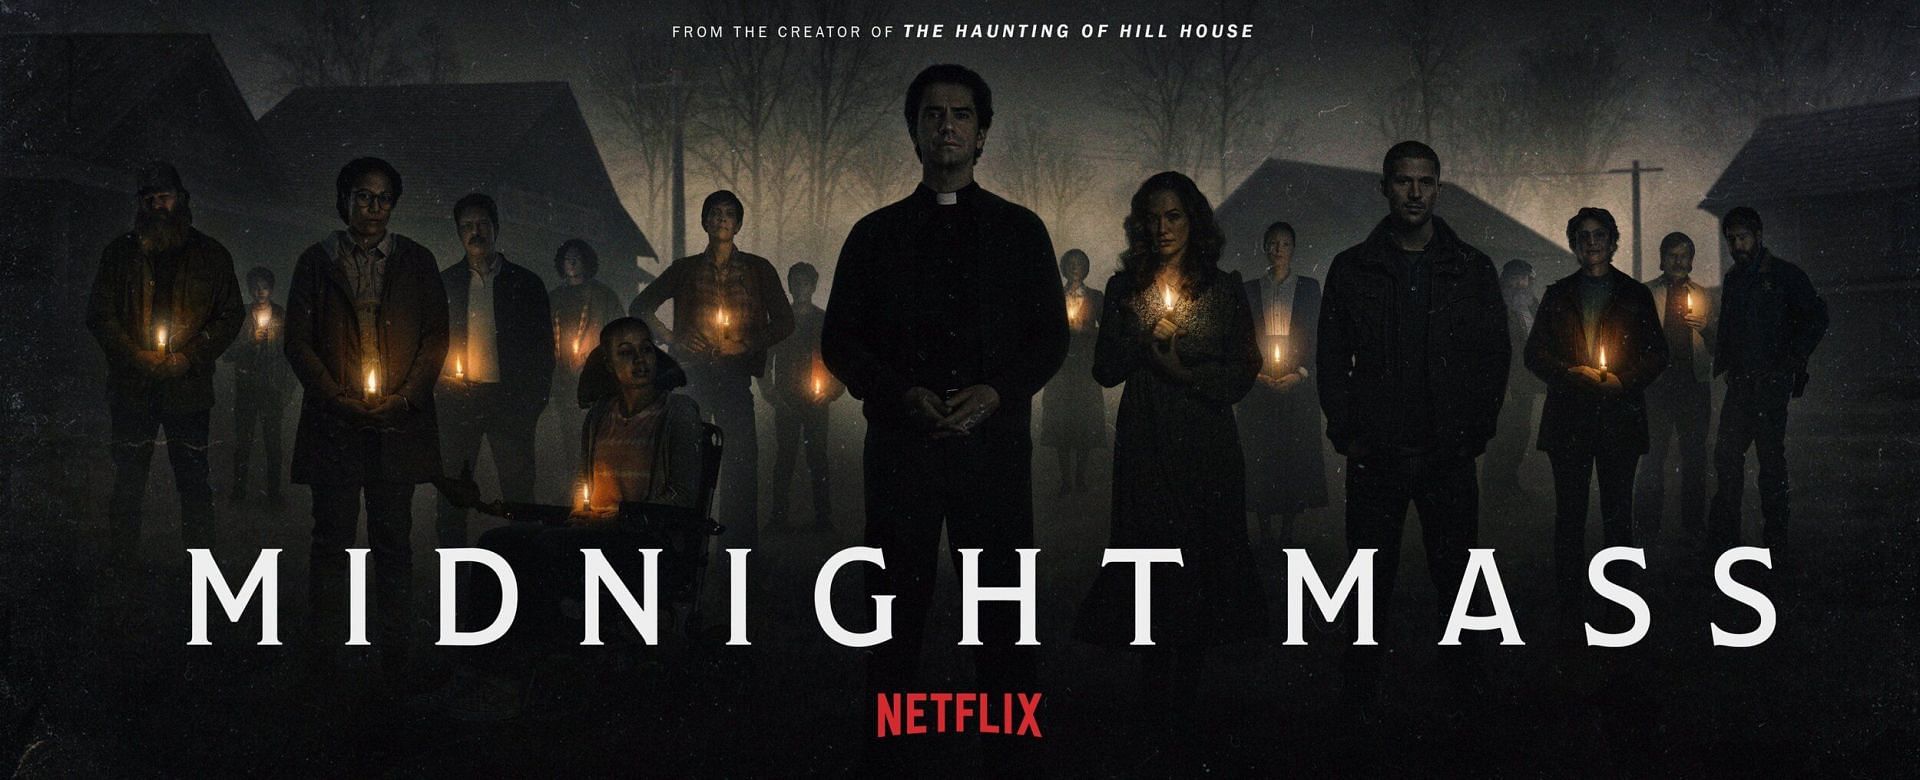 Midnight Mass (Images via Netflix)